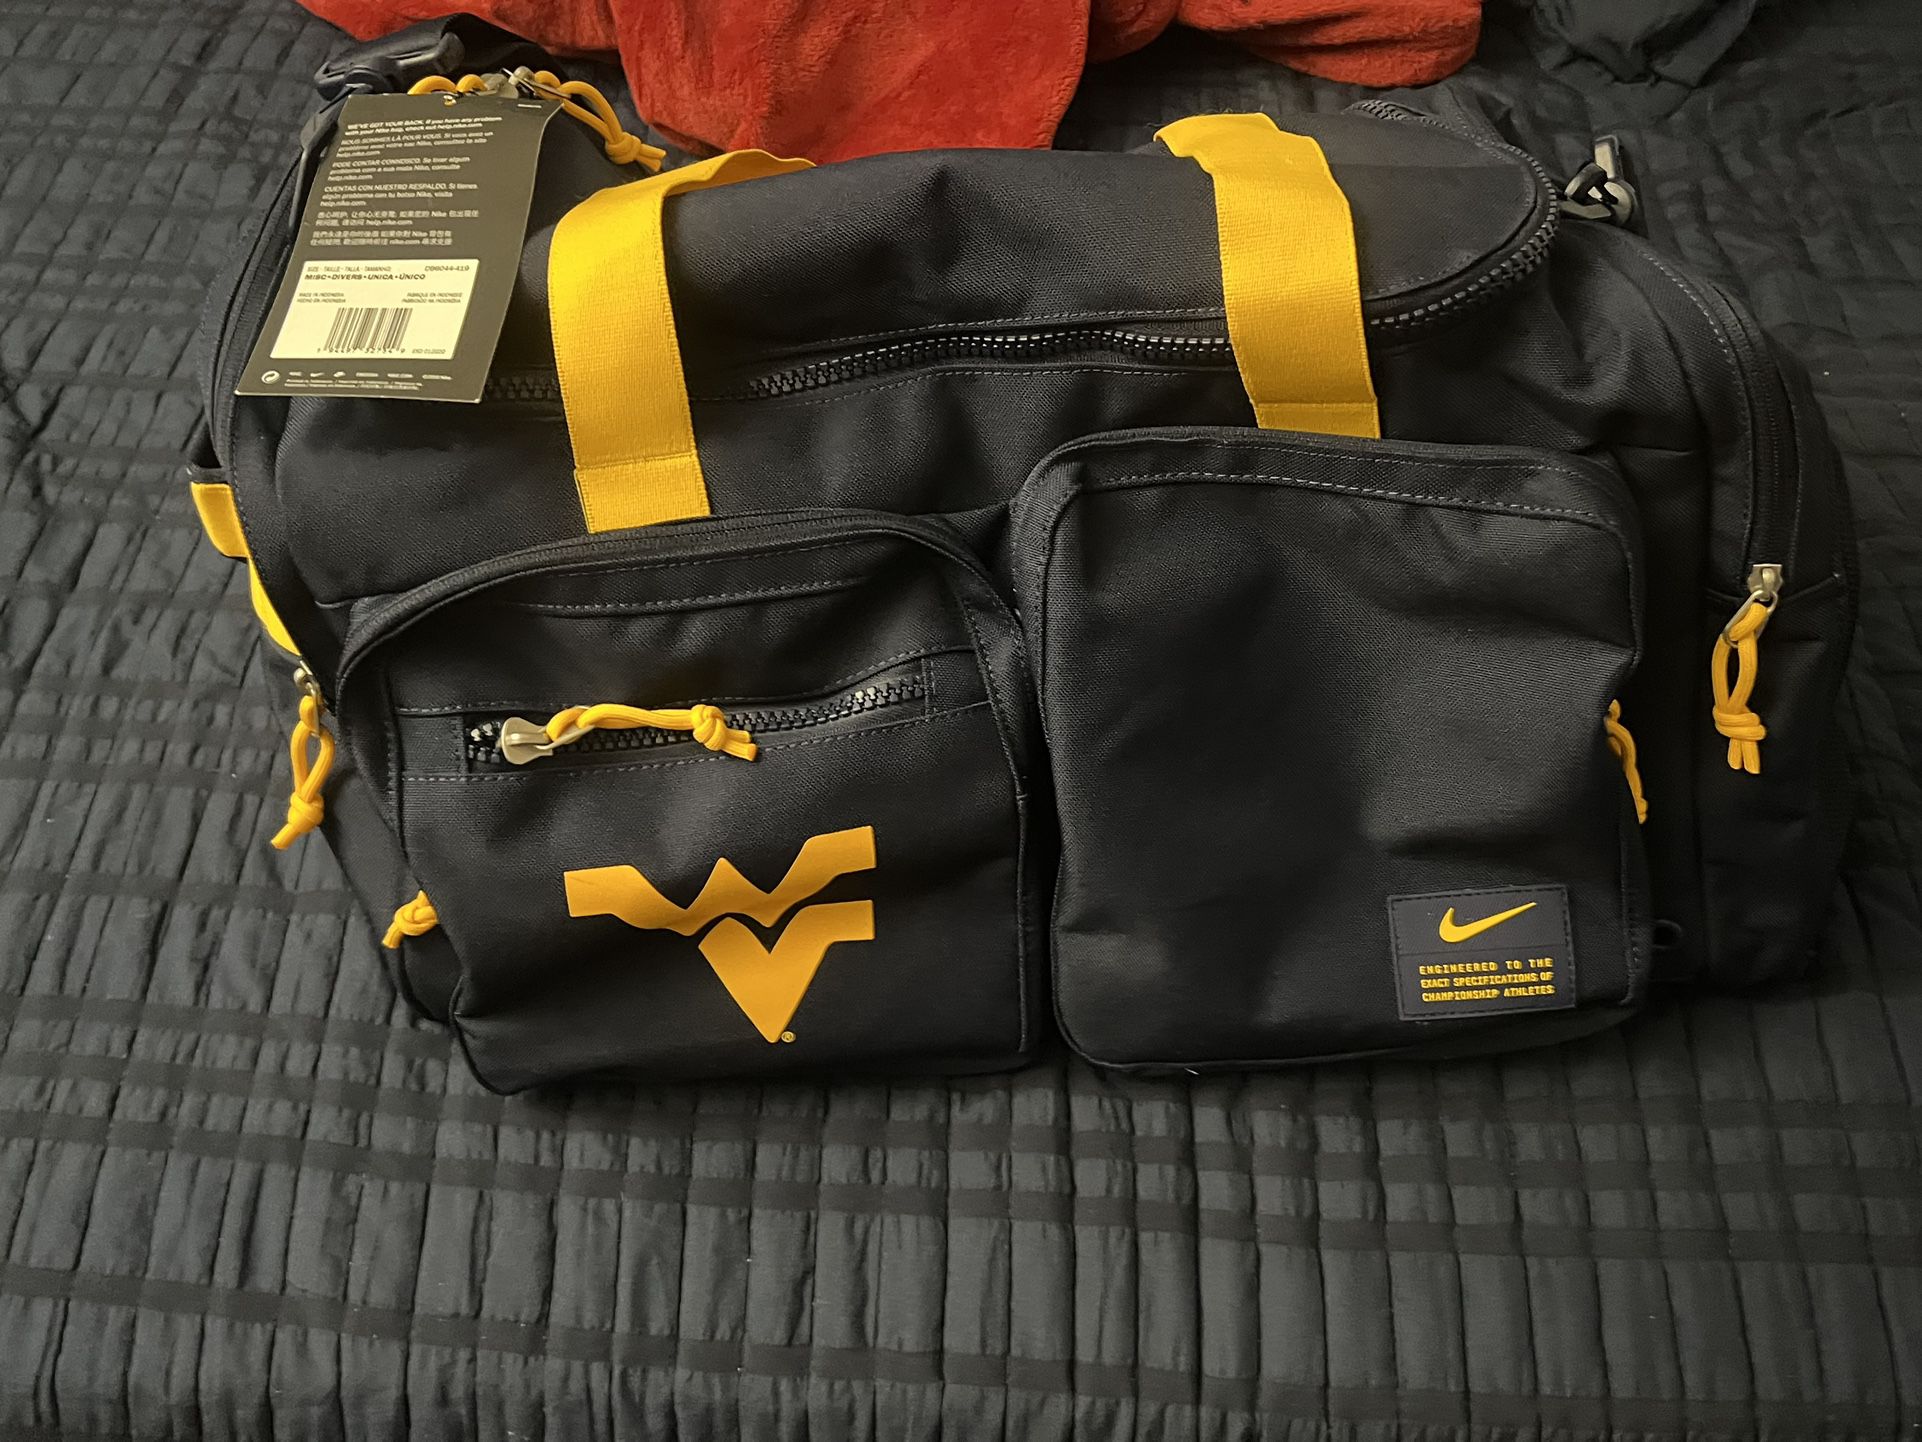 West Virginia Duffle Bag 